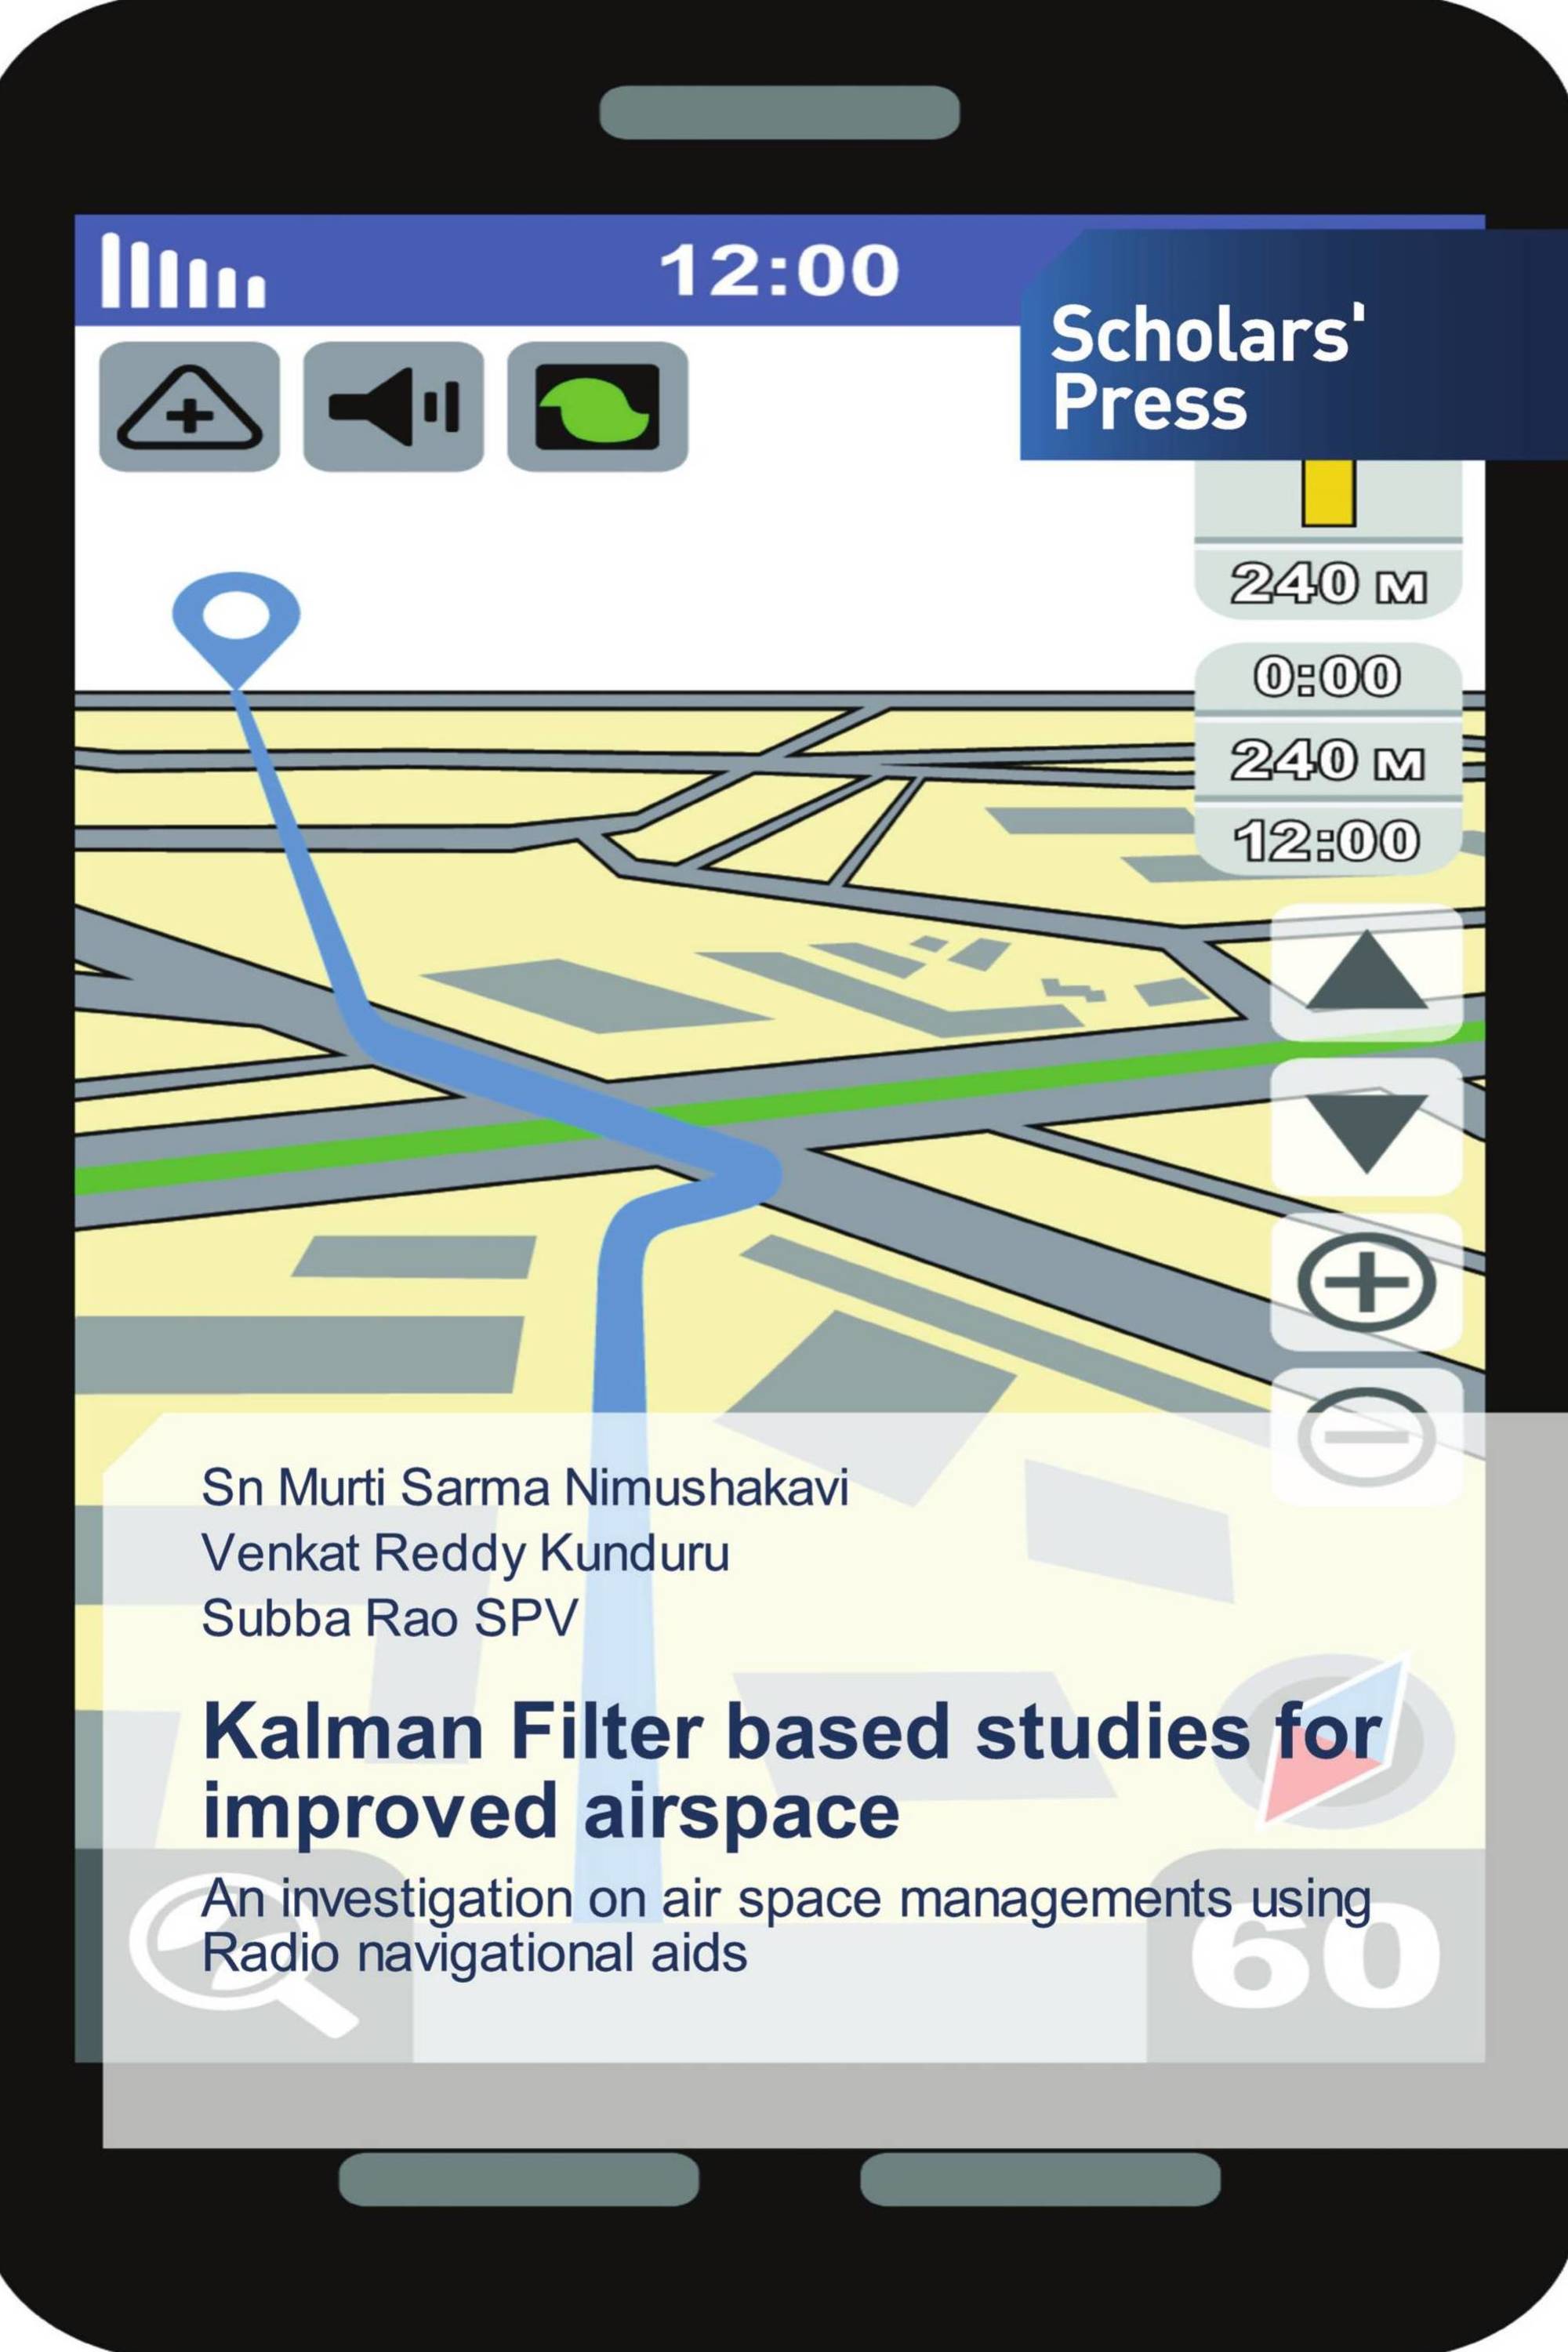 Kalman Filter based studies for improved airspace